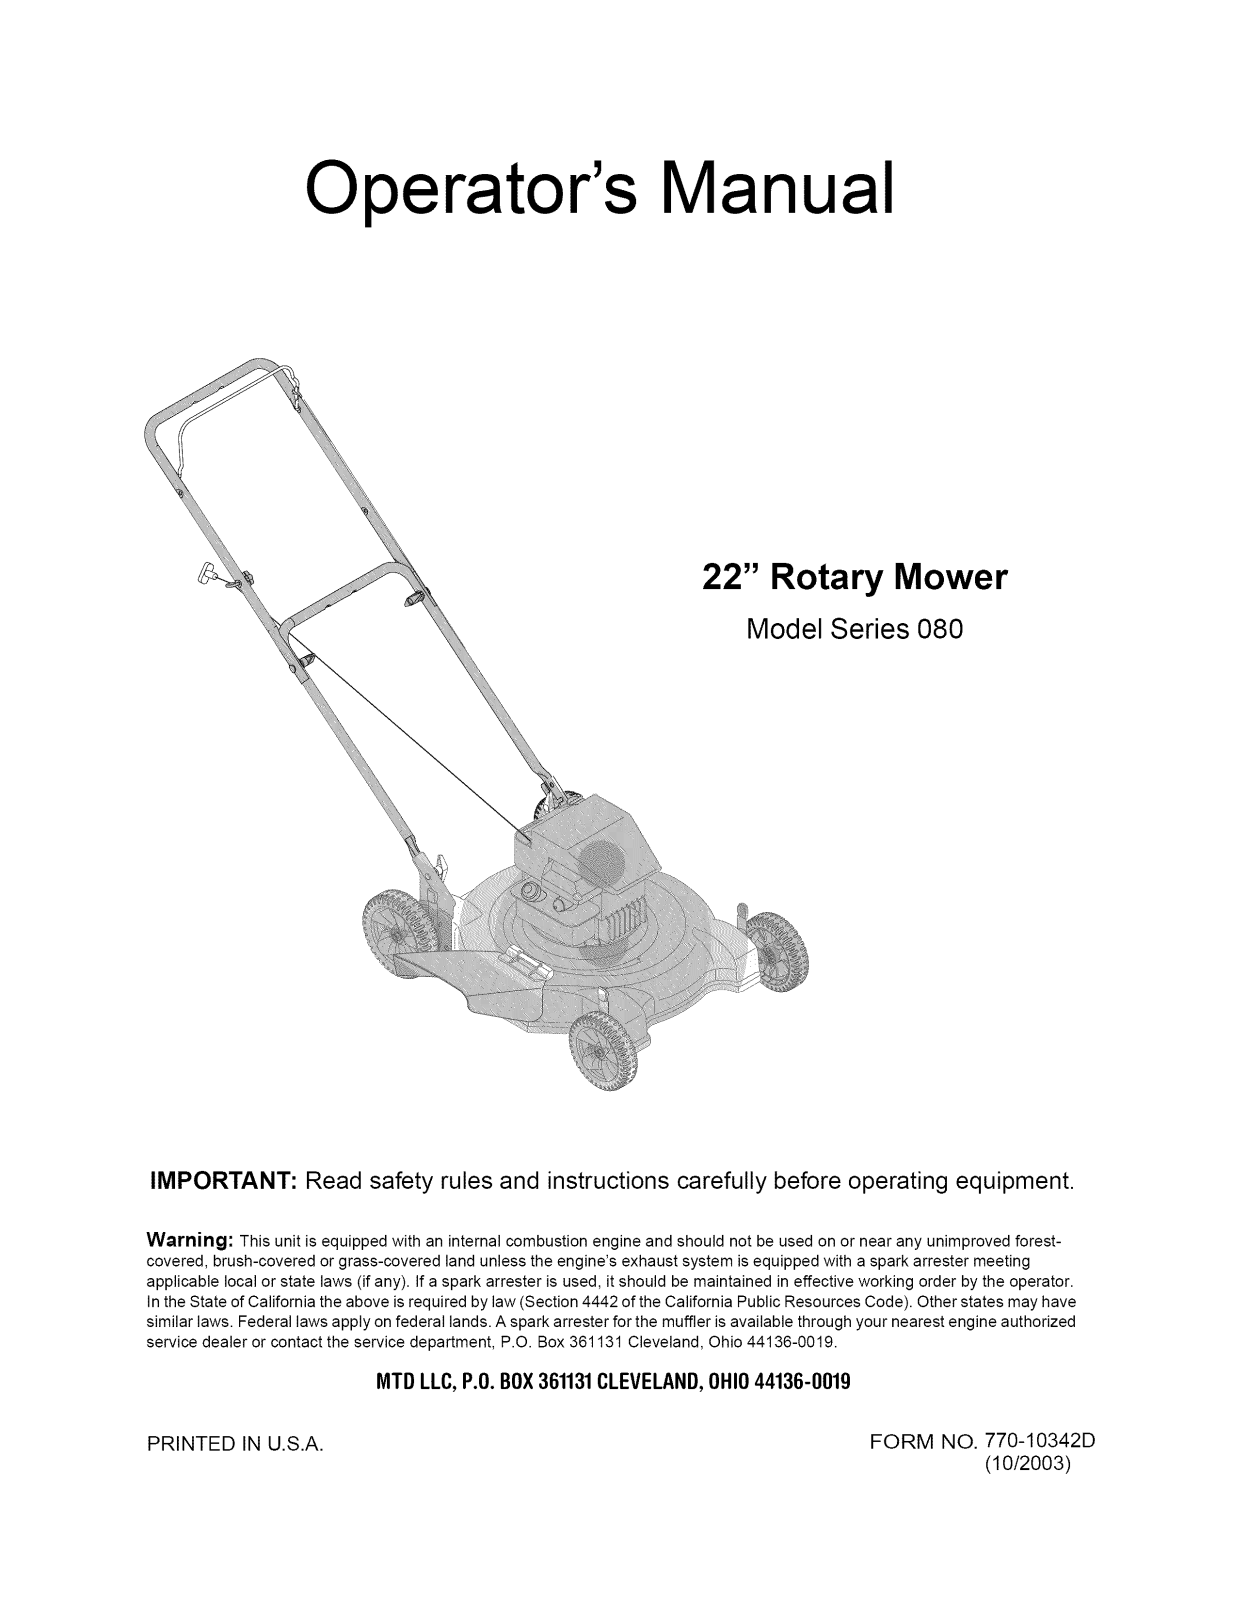 MTD 11B-084E752, 11A-084E700, 11A-083F700 Owner’s Manual